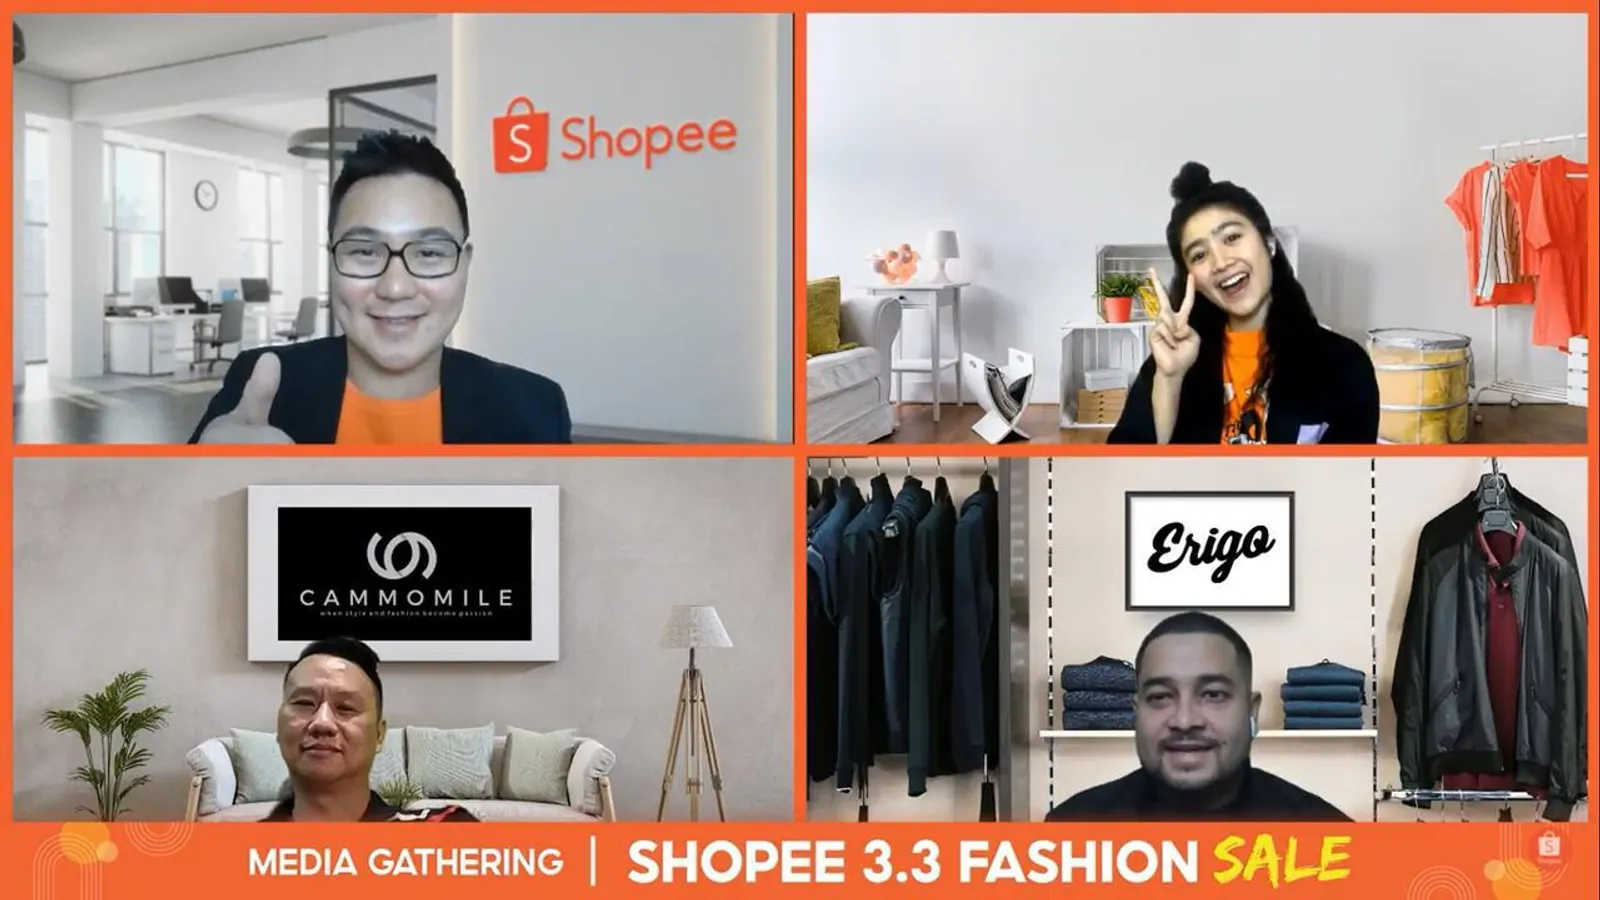 Shopee Hadirkan 3.3 Fashion Sale dengan Fashion Item Paling Kekinian